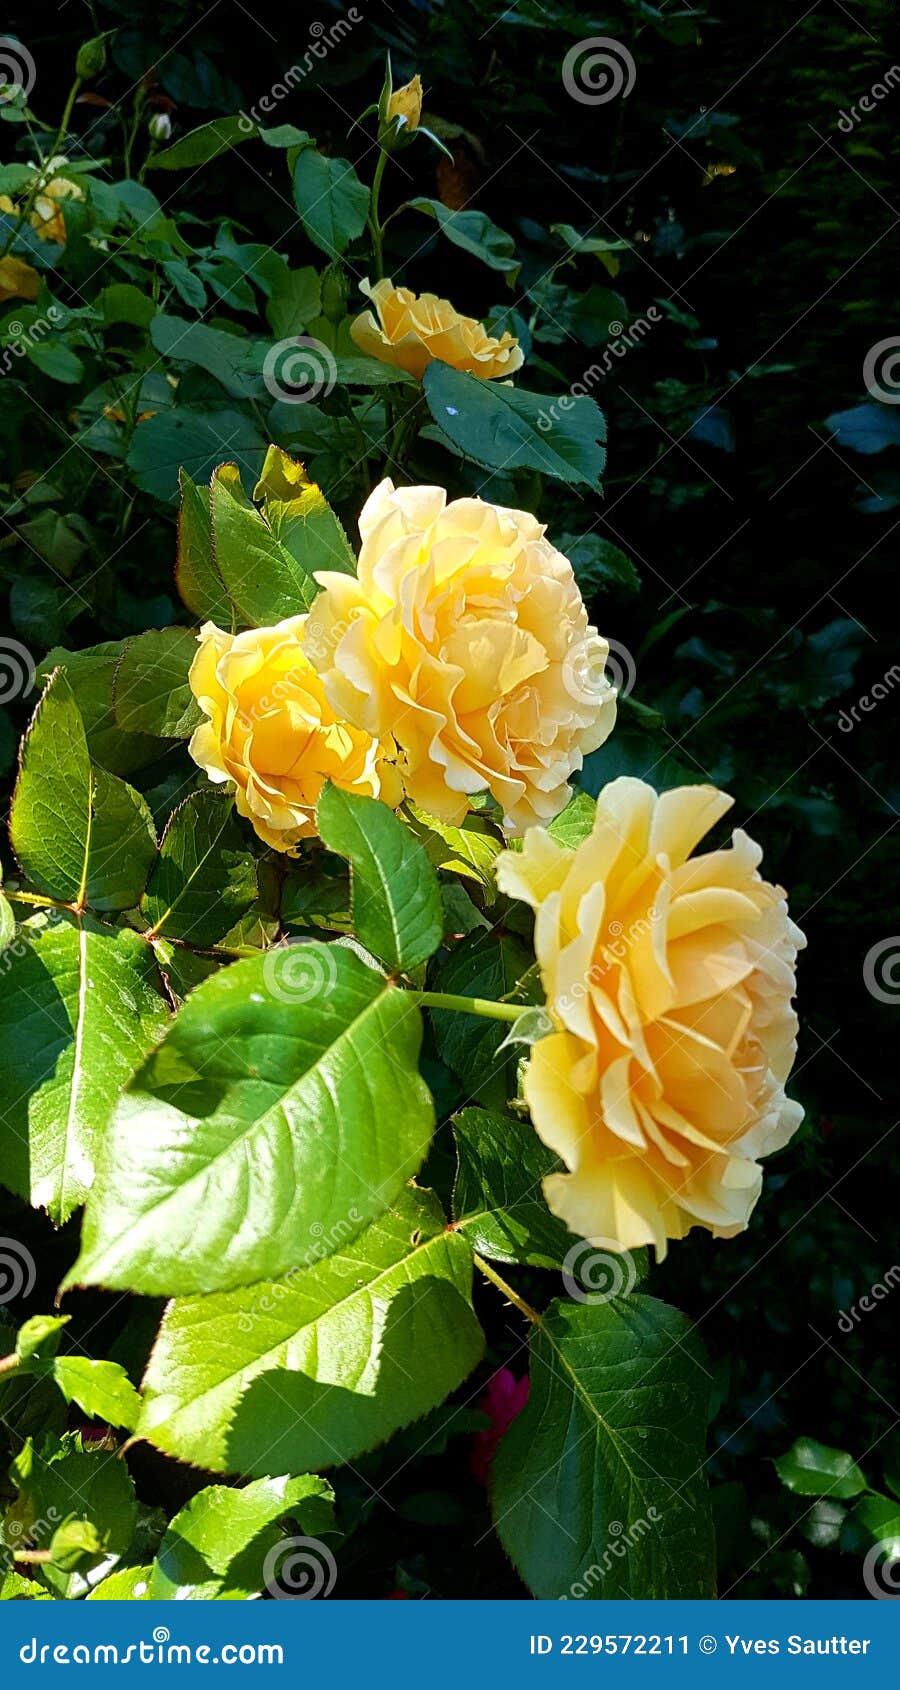 yellow rose blooming summer, perfum, natural romantic beauty